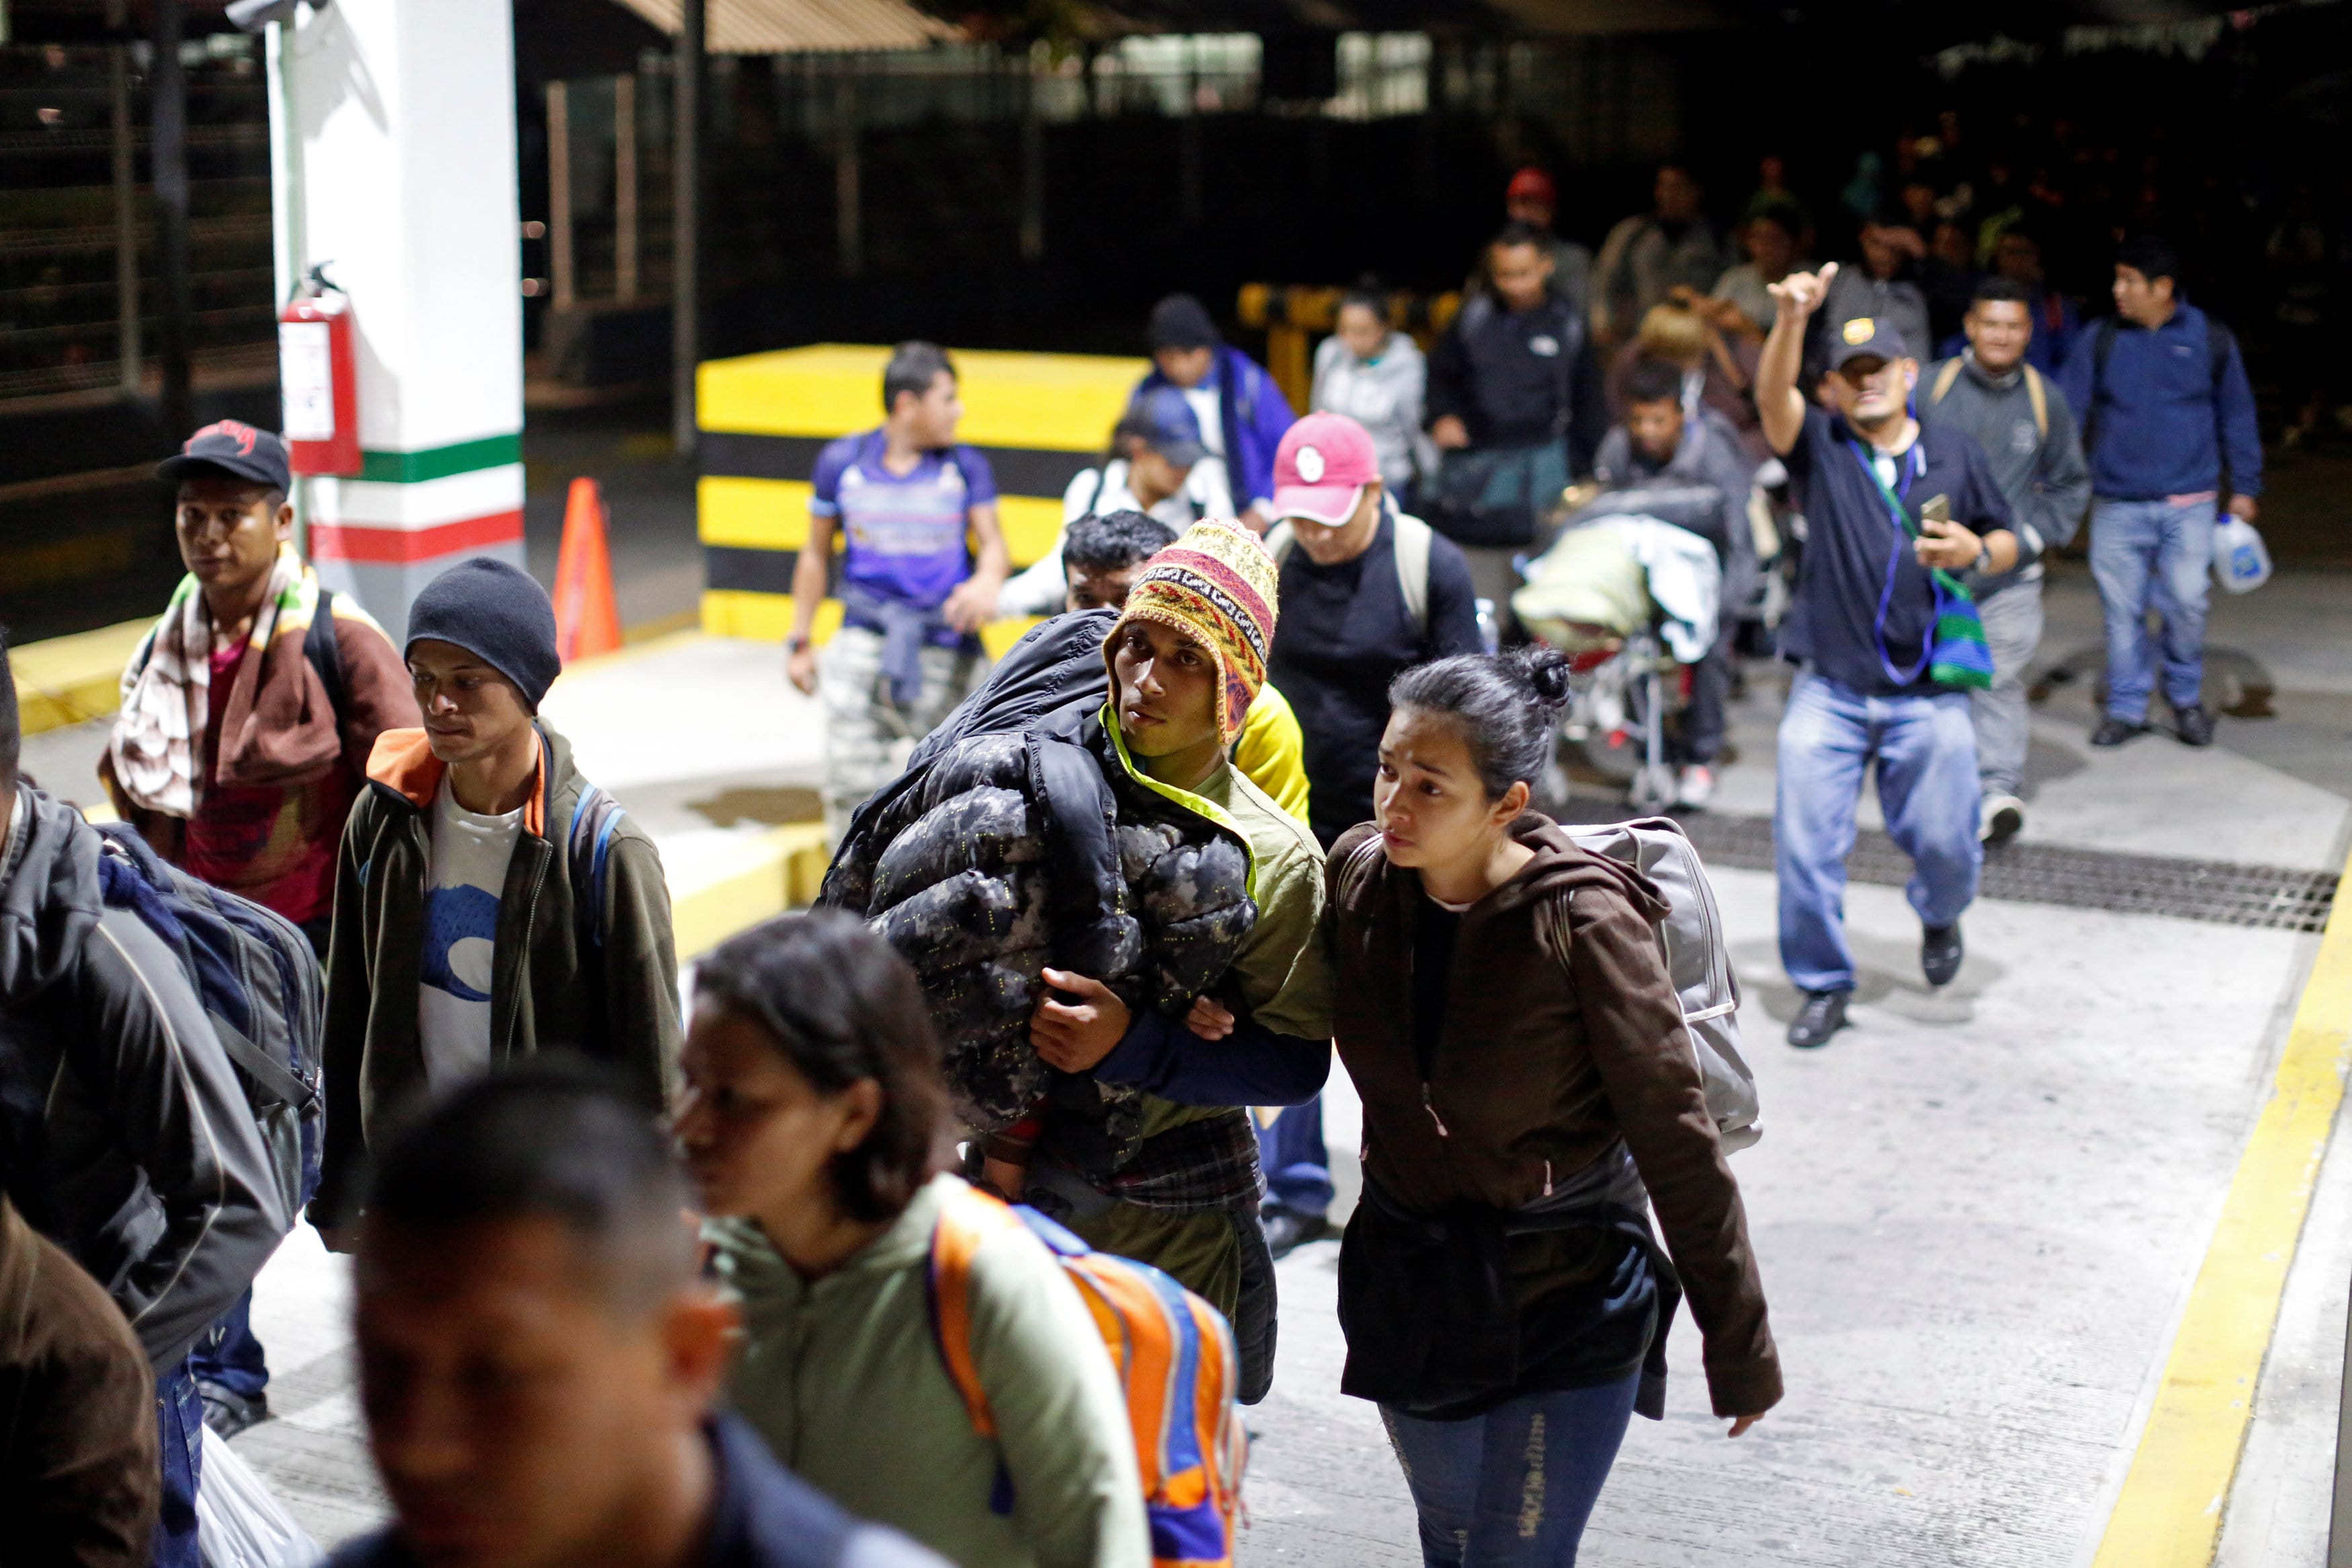 New caravan of Honduran migrants crosses into Mexico - TVTS